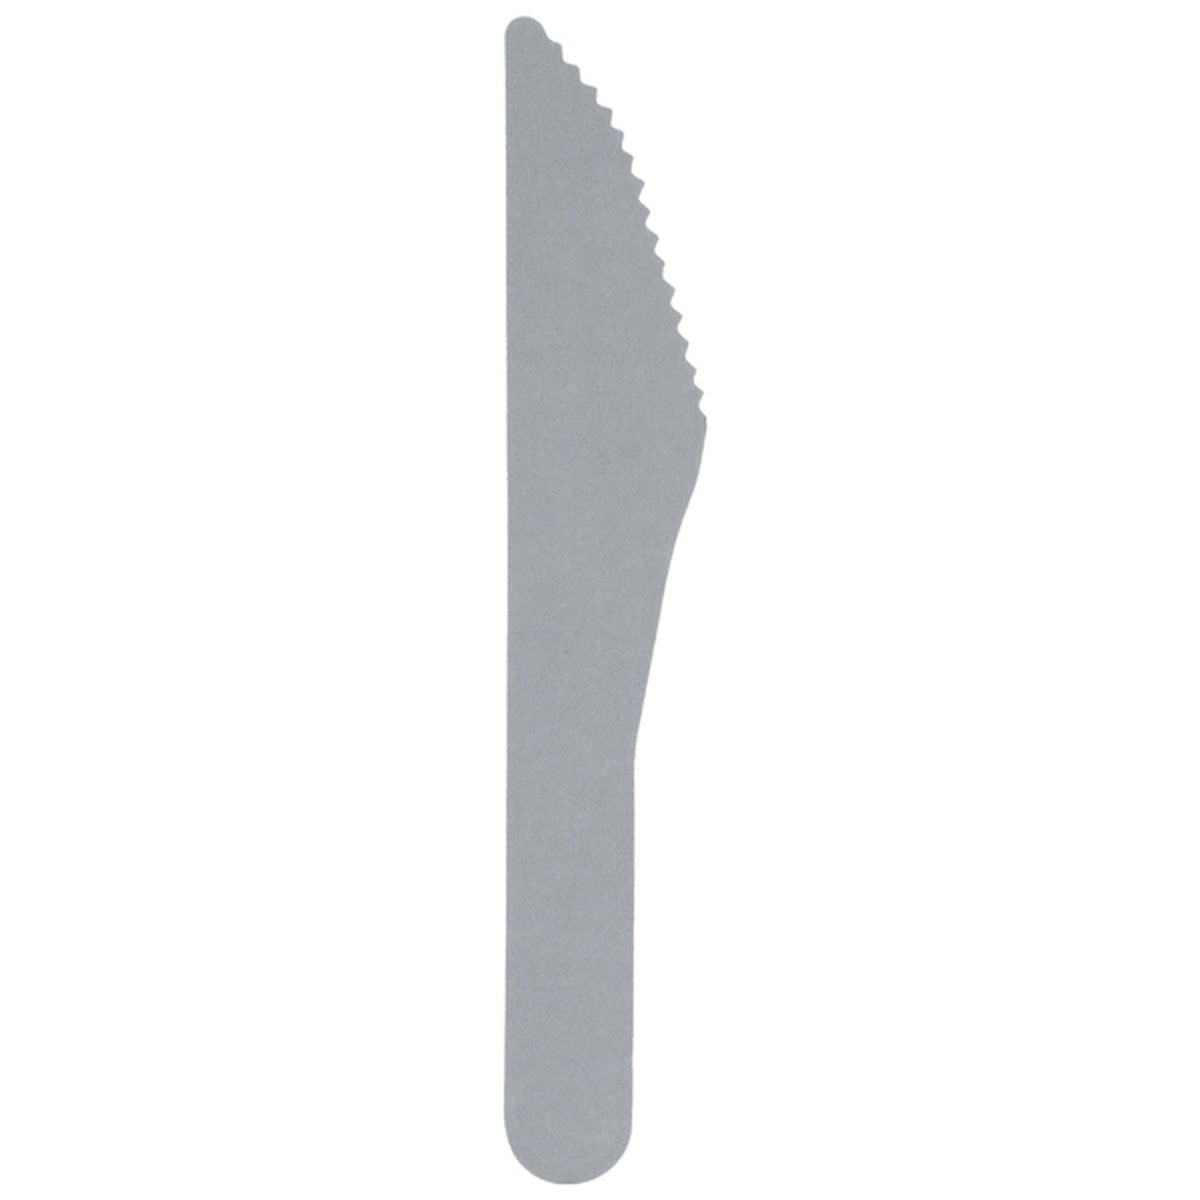 SANTEX Disposable-Plasticware Silver ECO Paper Knives, 10 Count